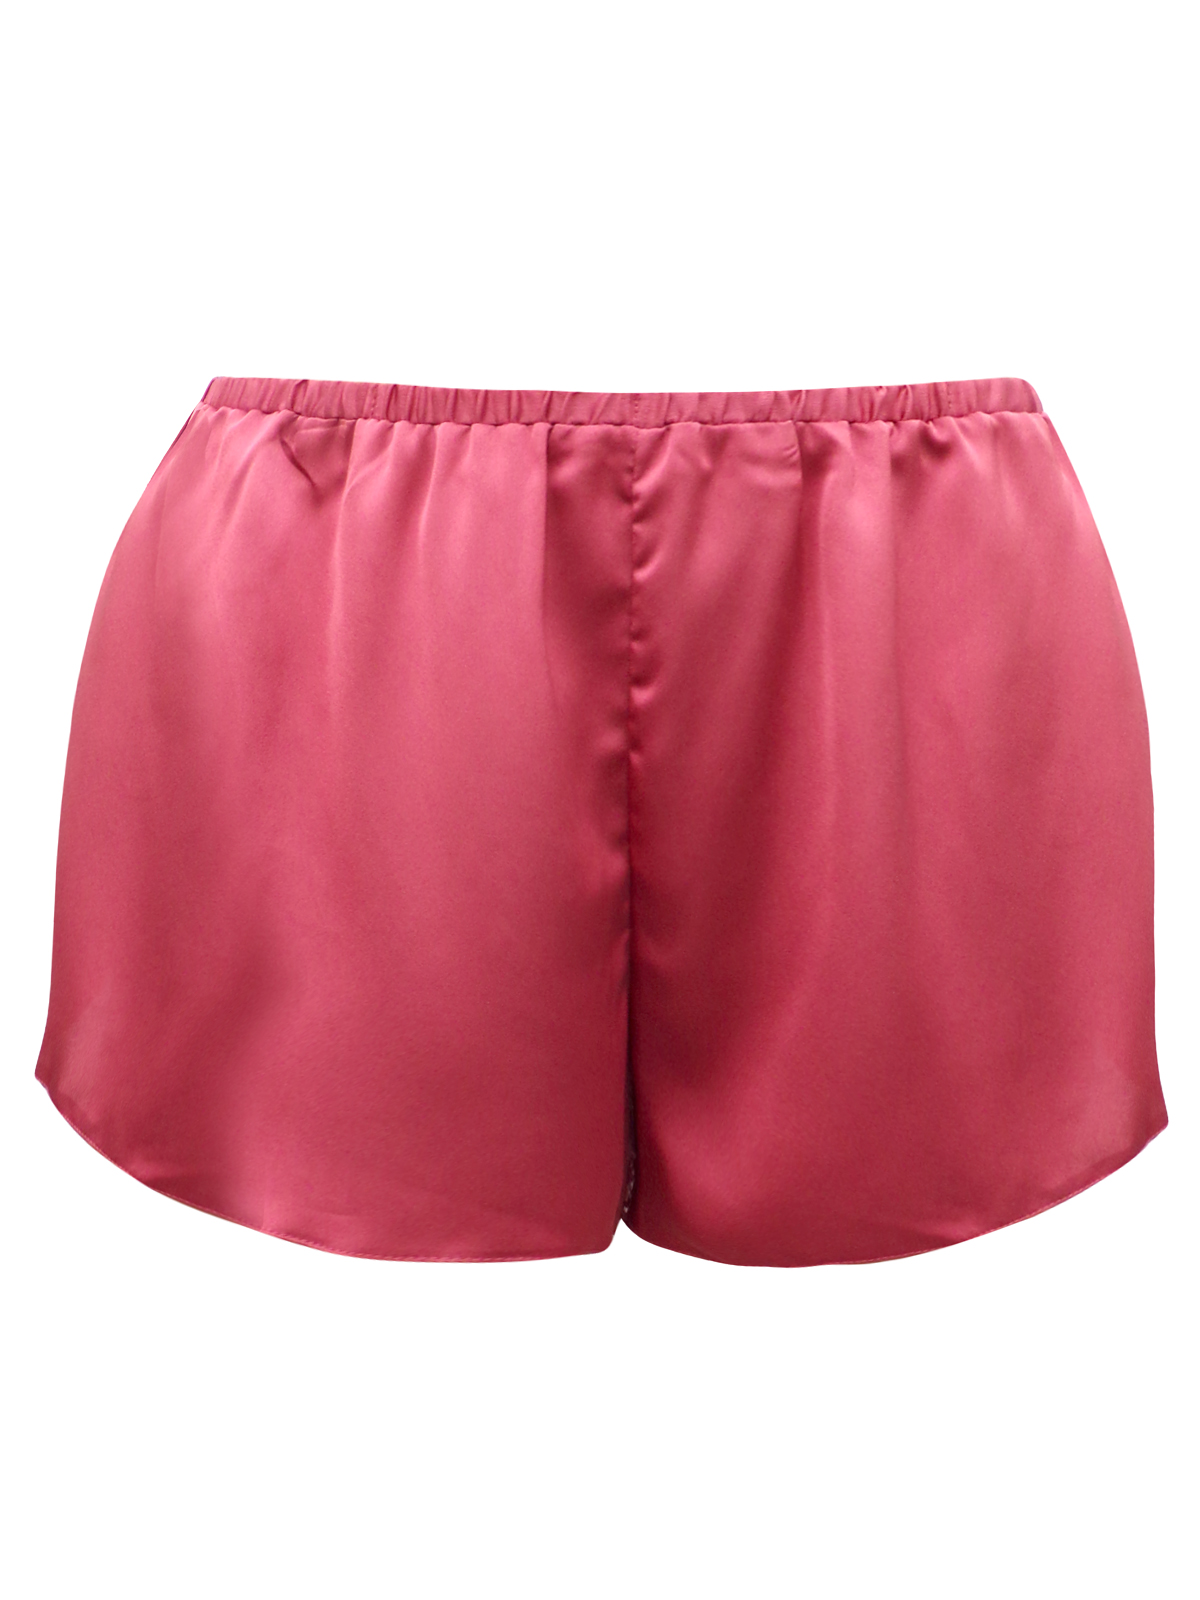 ASOS RUST Lace Panelled Satin Pyjama Shorts - Plus Size 18 to 26